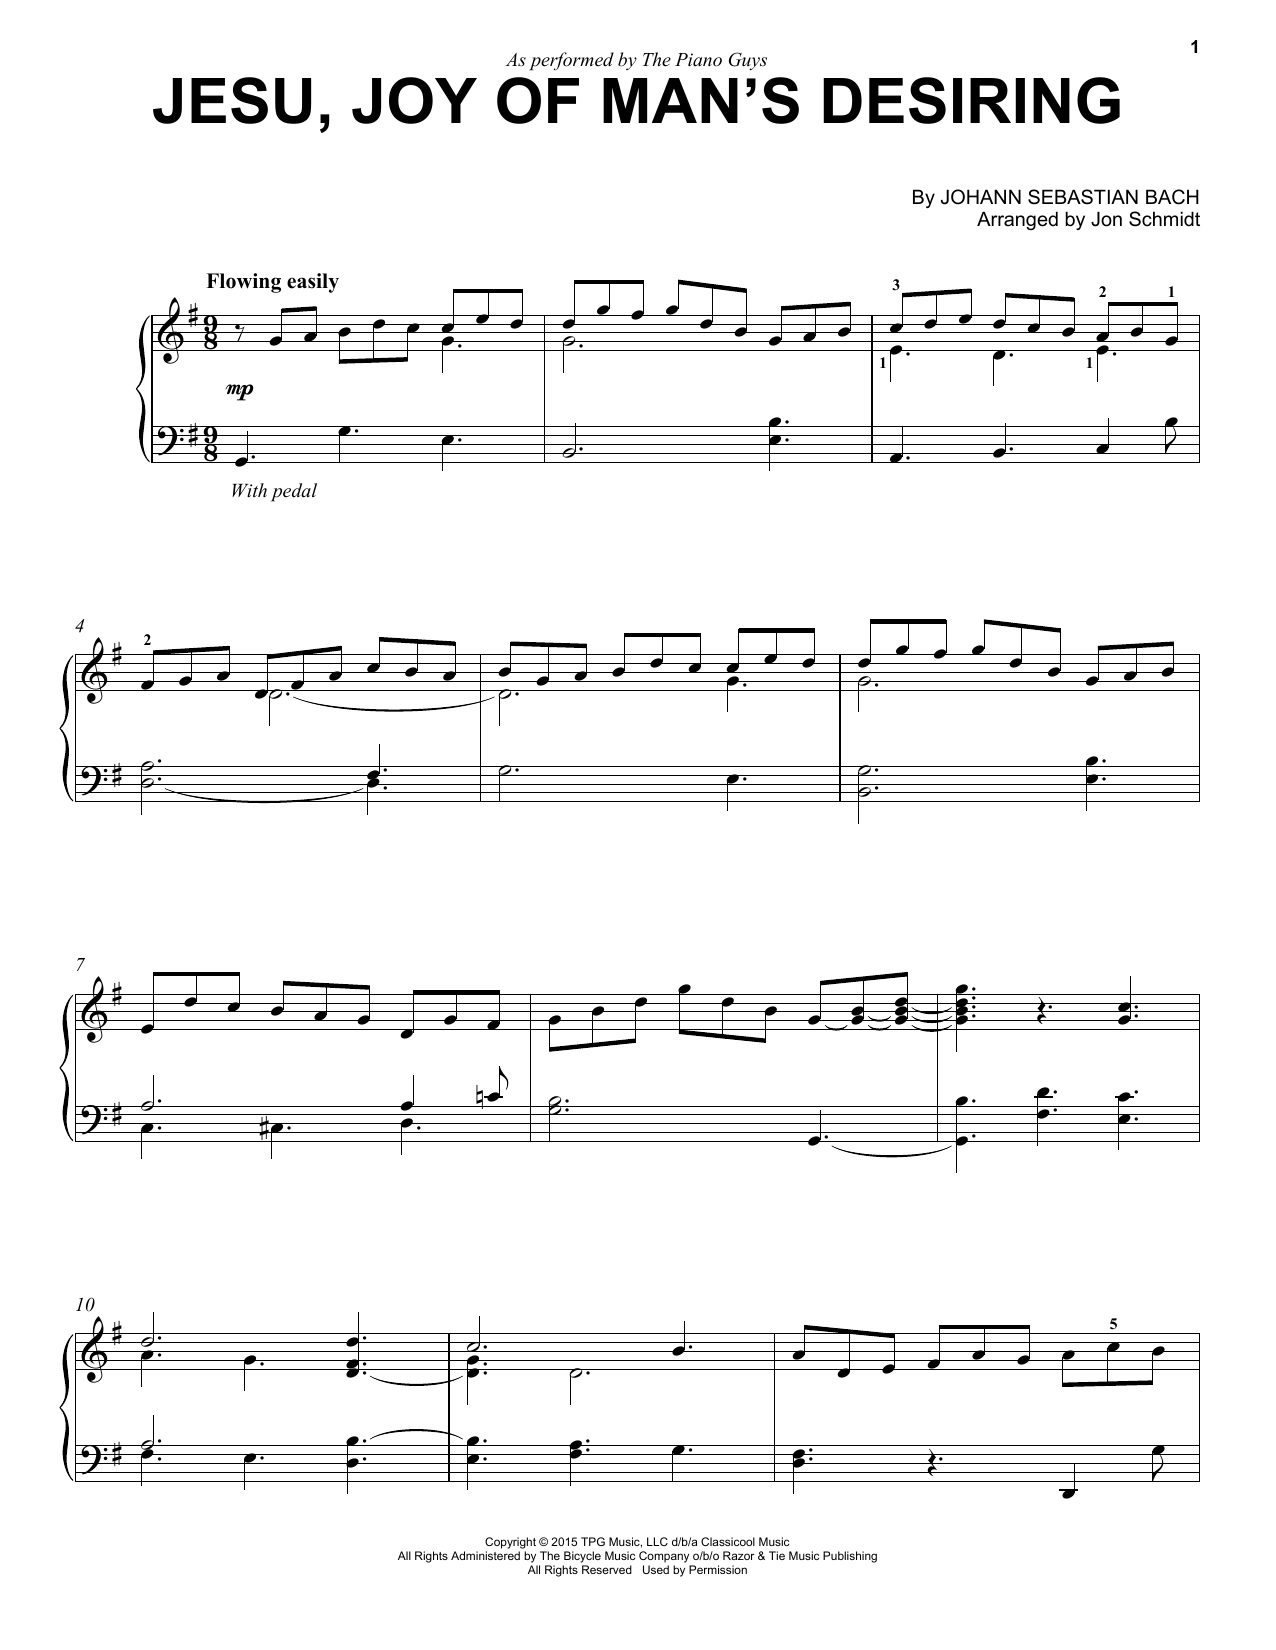 The Piano Guys Jesu, Joy Of Man's Desiring Sheet Music Notes & Chords for Piano - Download or Print PDF